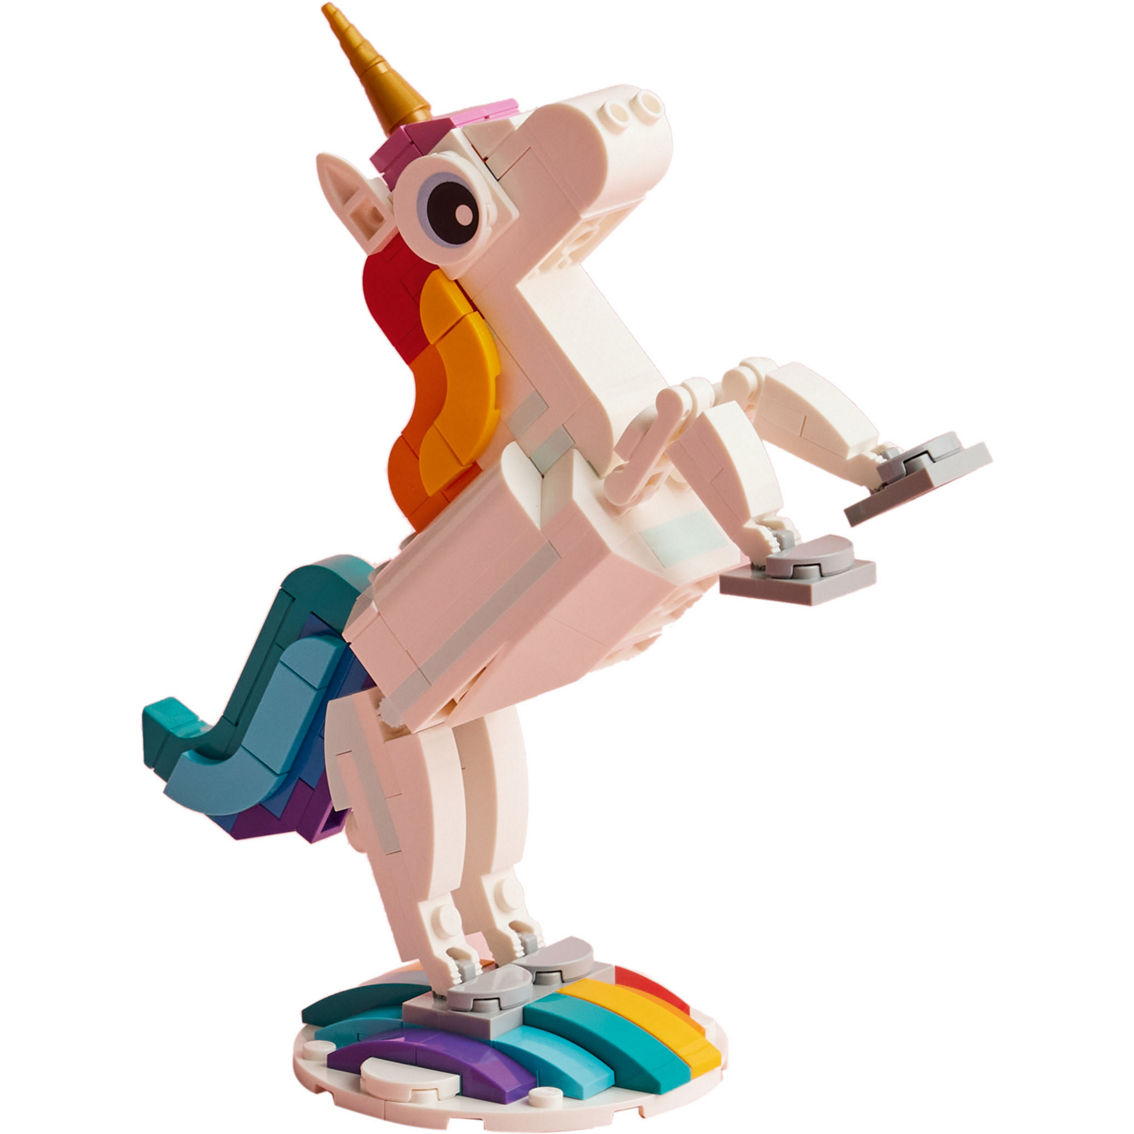 LEGO Creator Magical Unicorn - Image 4 of 6